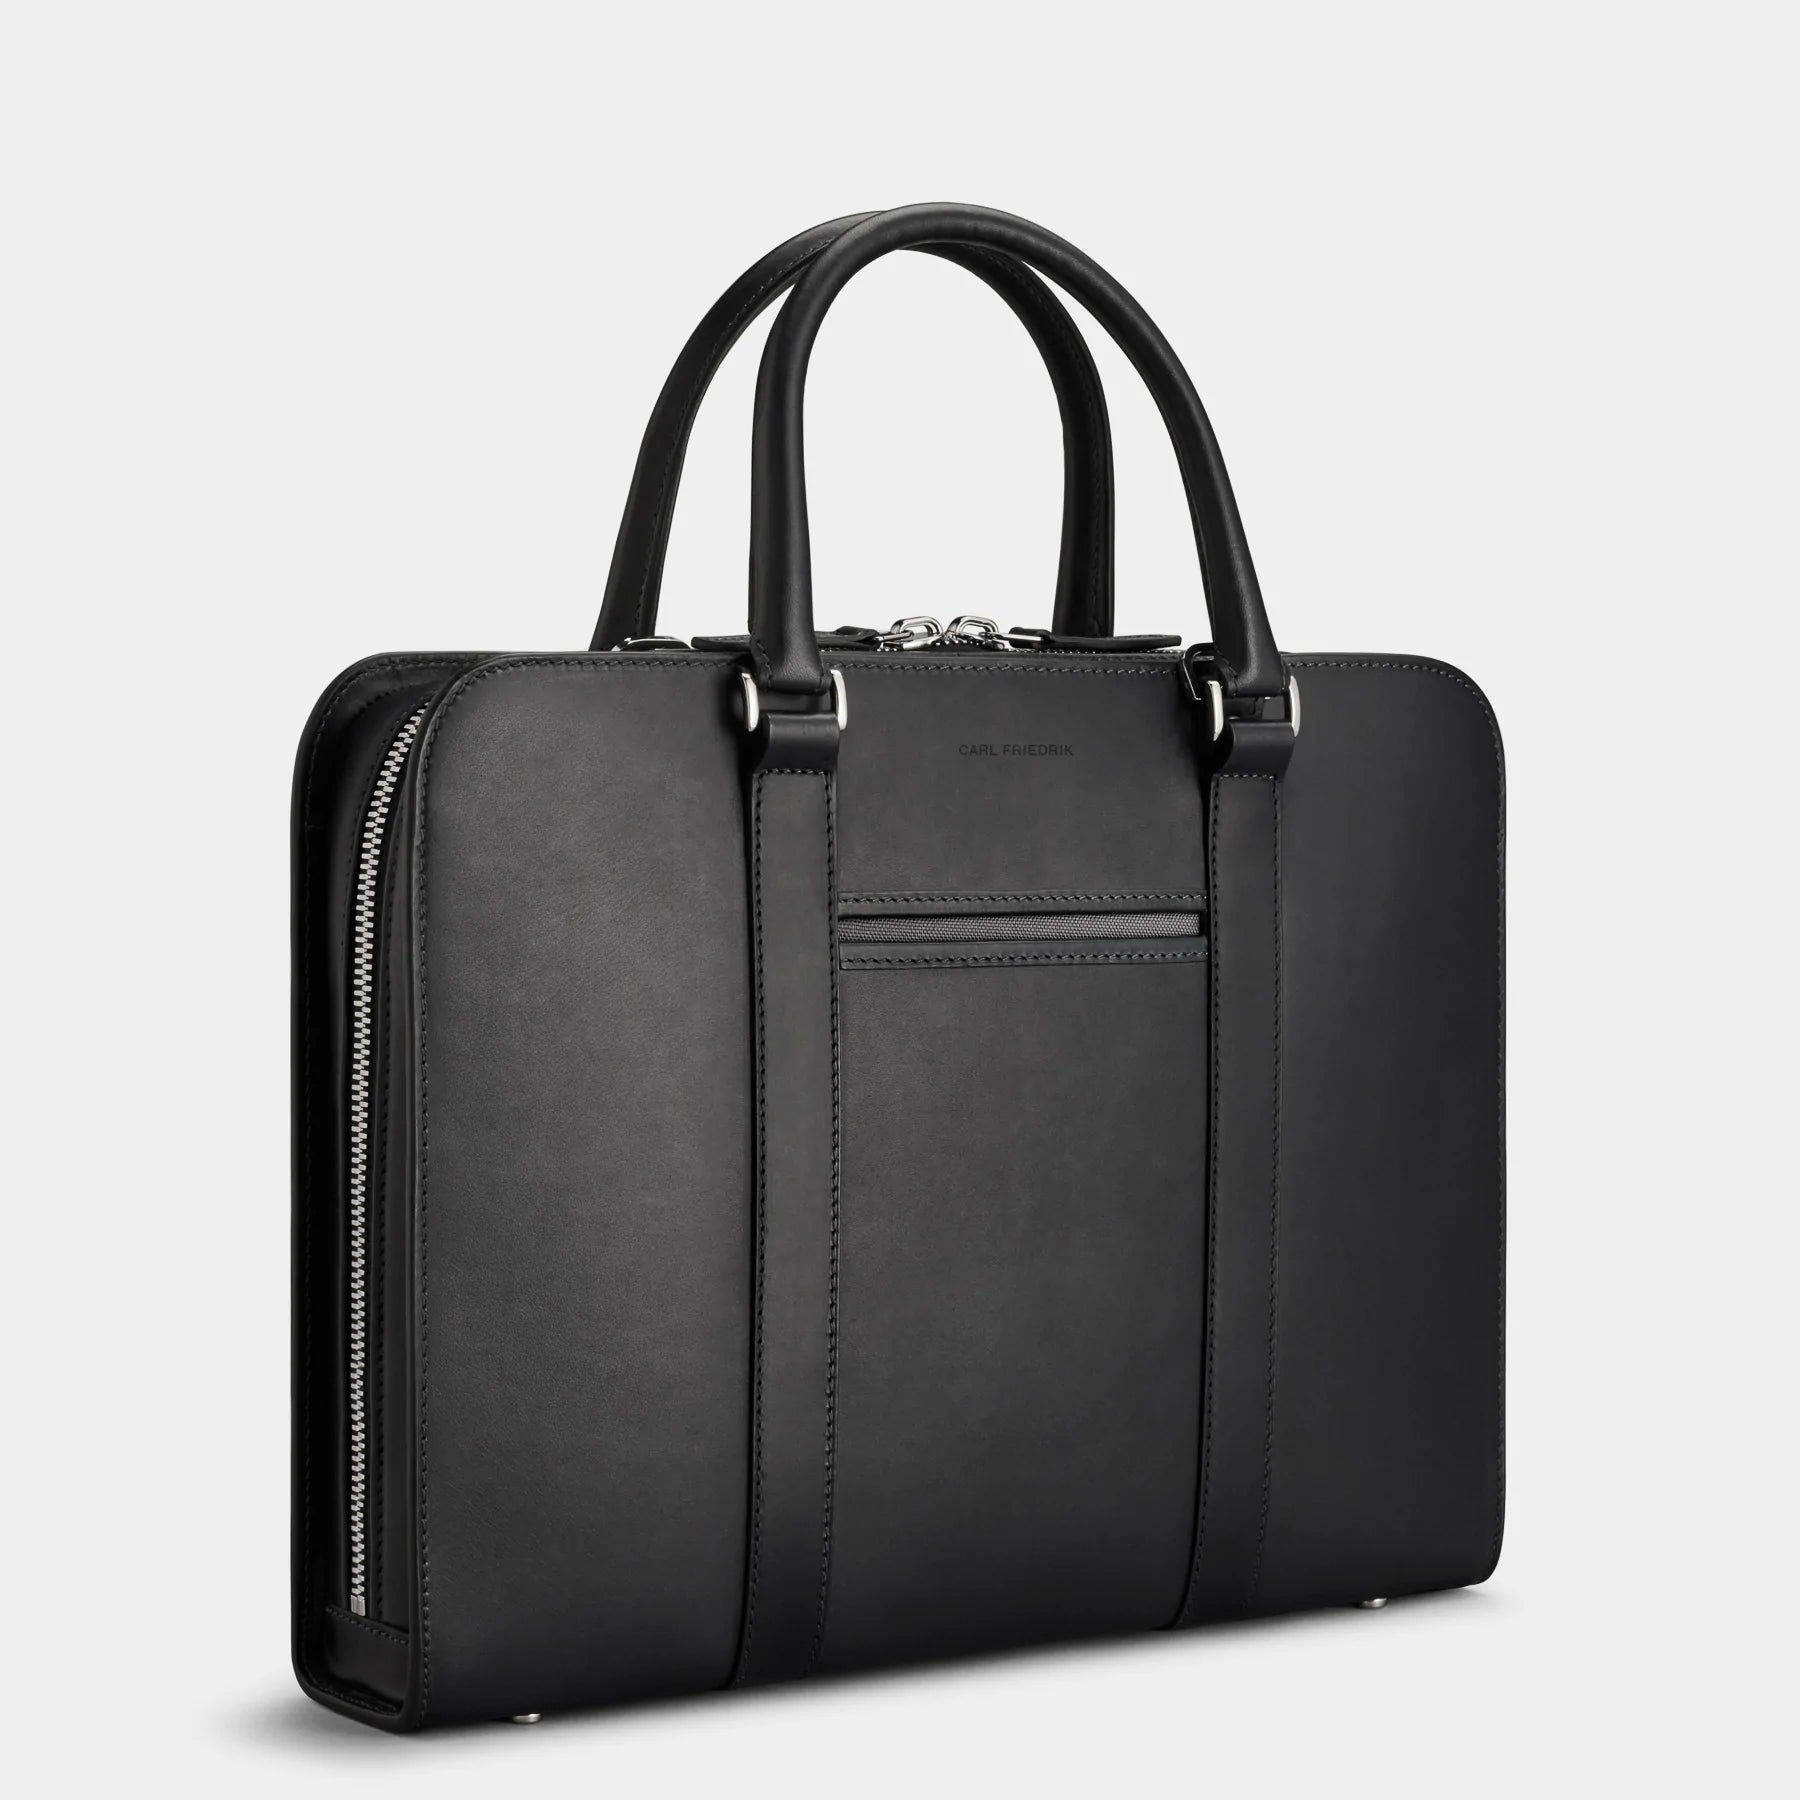 Palissy Briefcase - Return Black / Grey Slim leather briefcase - Good Condition